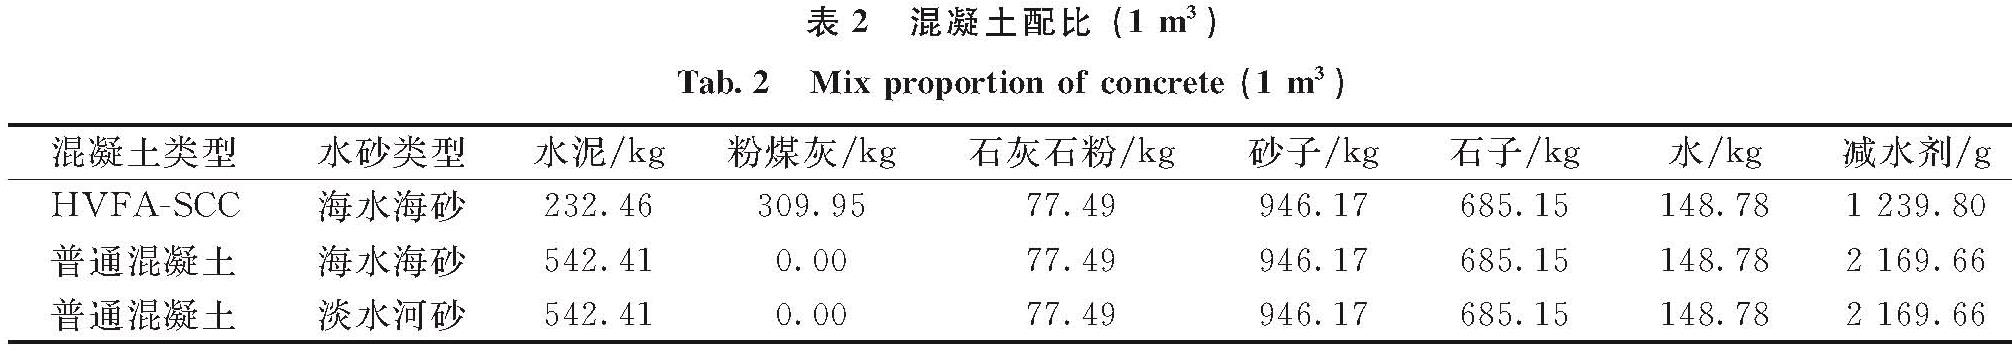 表2 混凝土配比(1 m3)<br/>Tab.2 Mix proportion of concrete(1 m3)